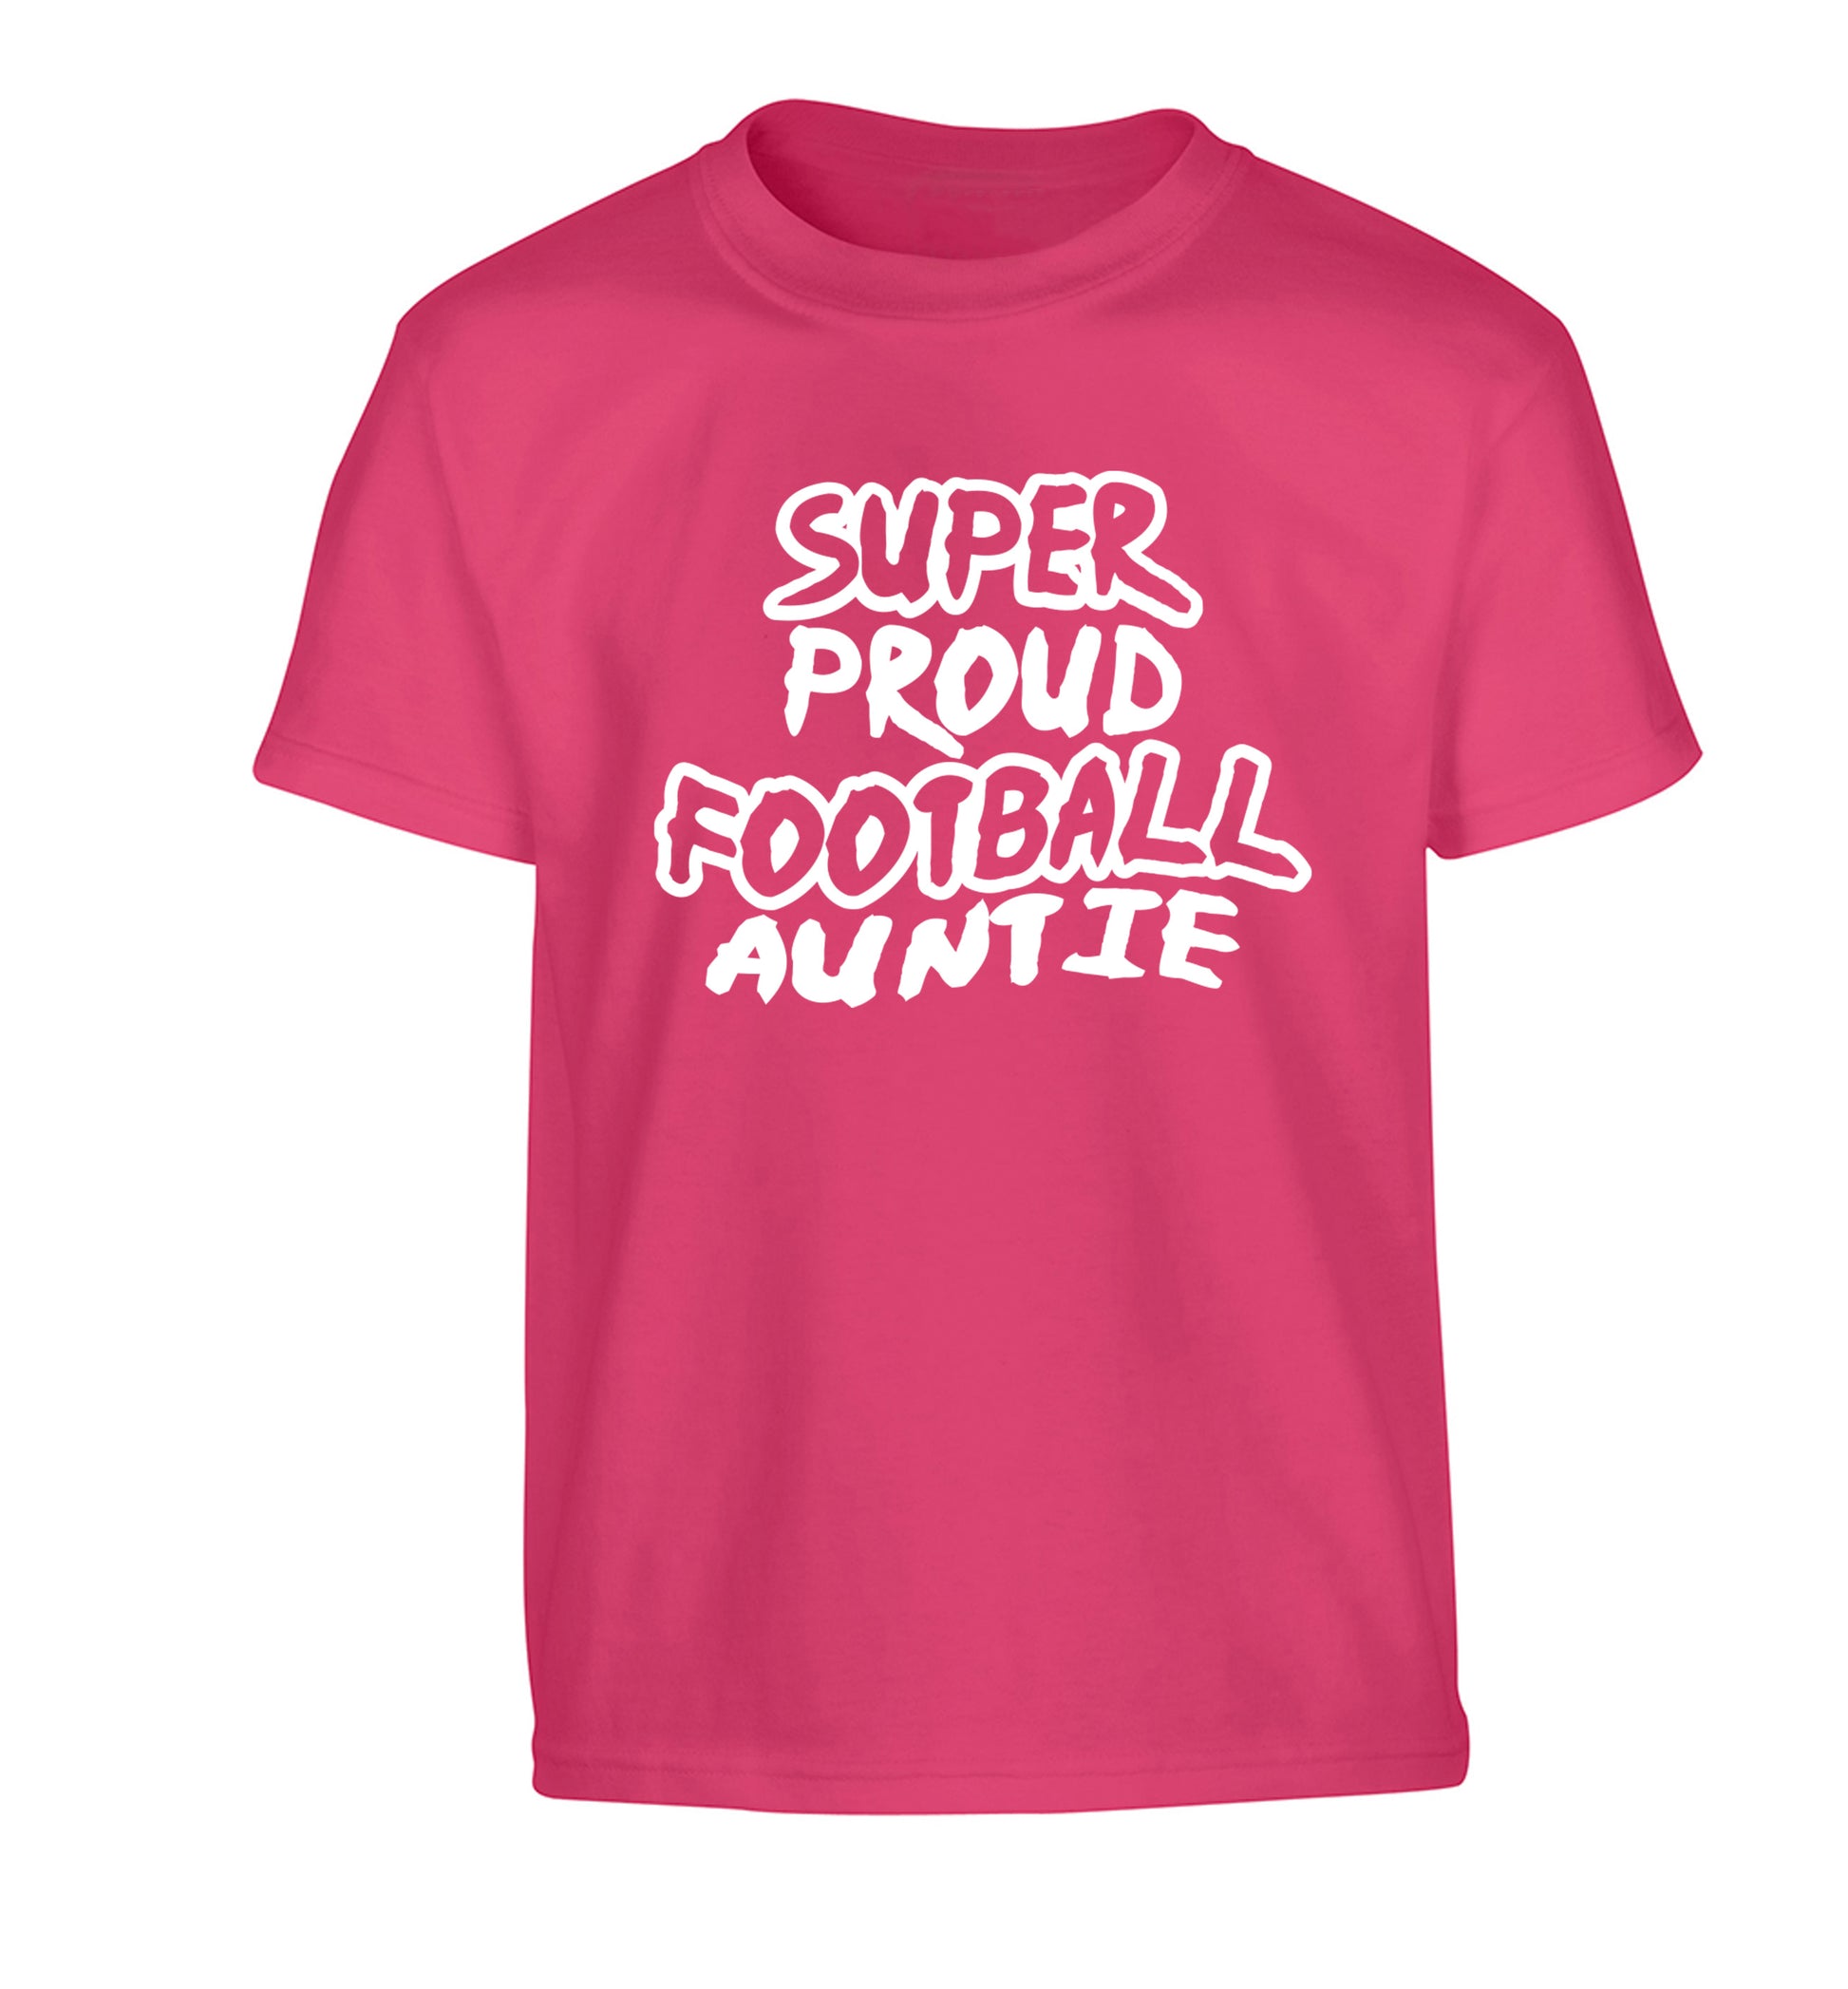 Super proud football auntie Children's pink Tshirt 12-14 Years